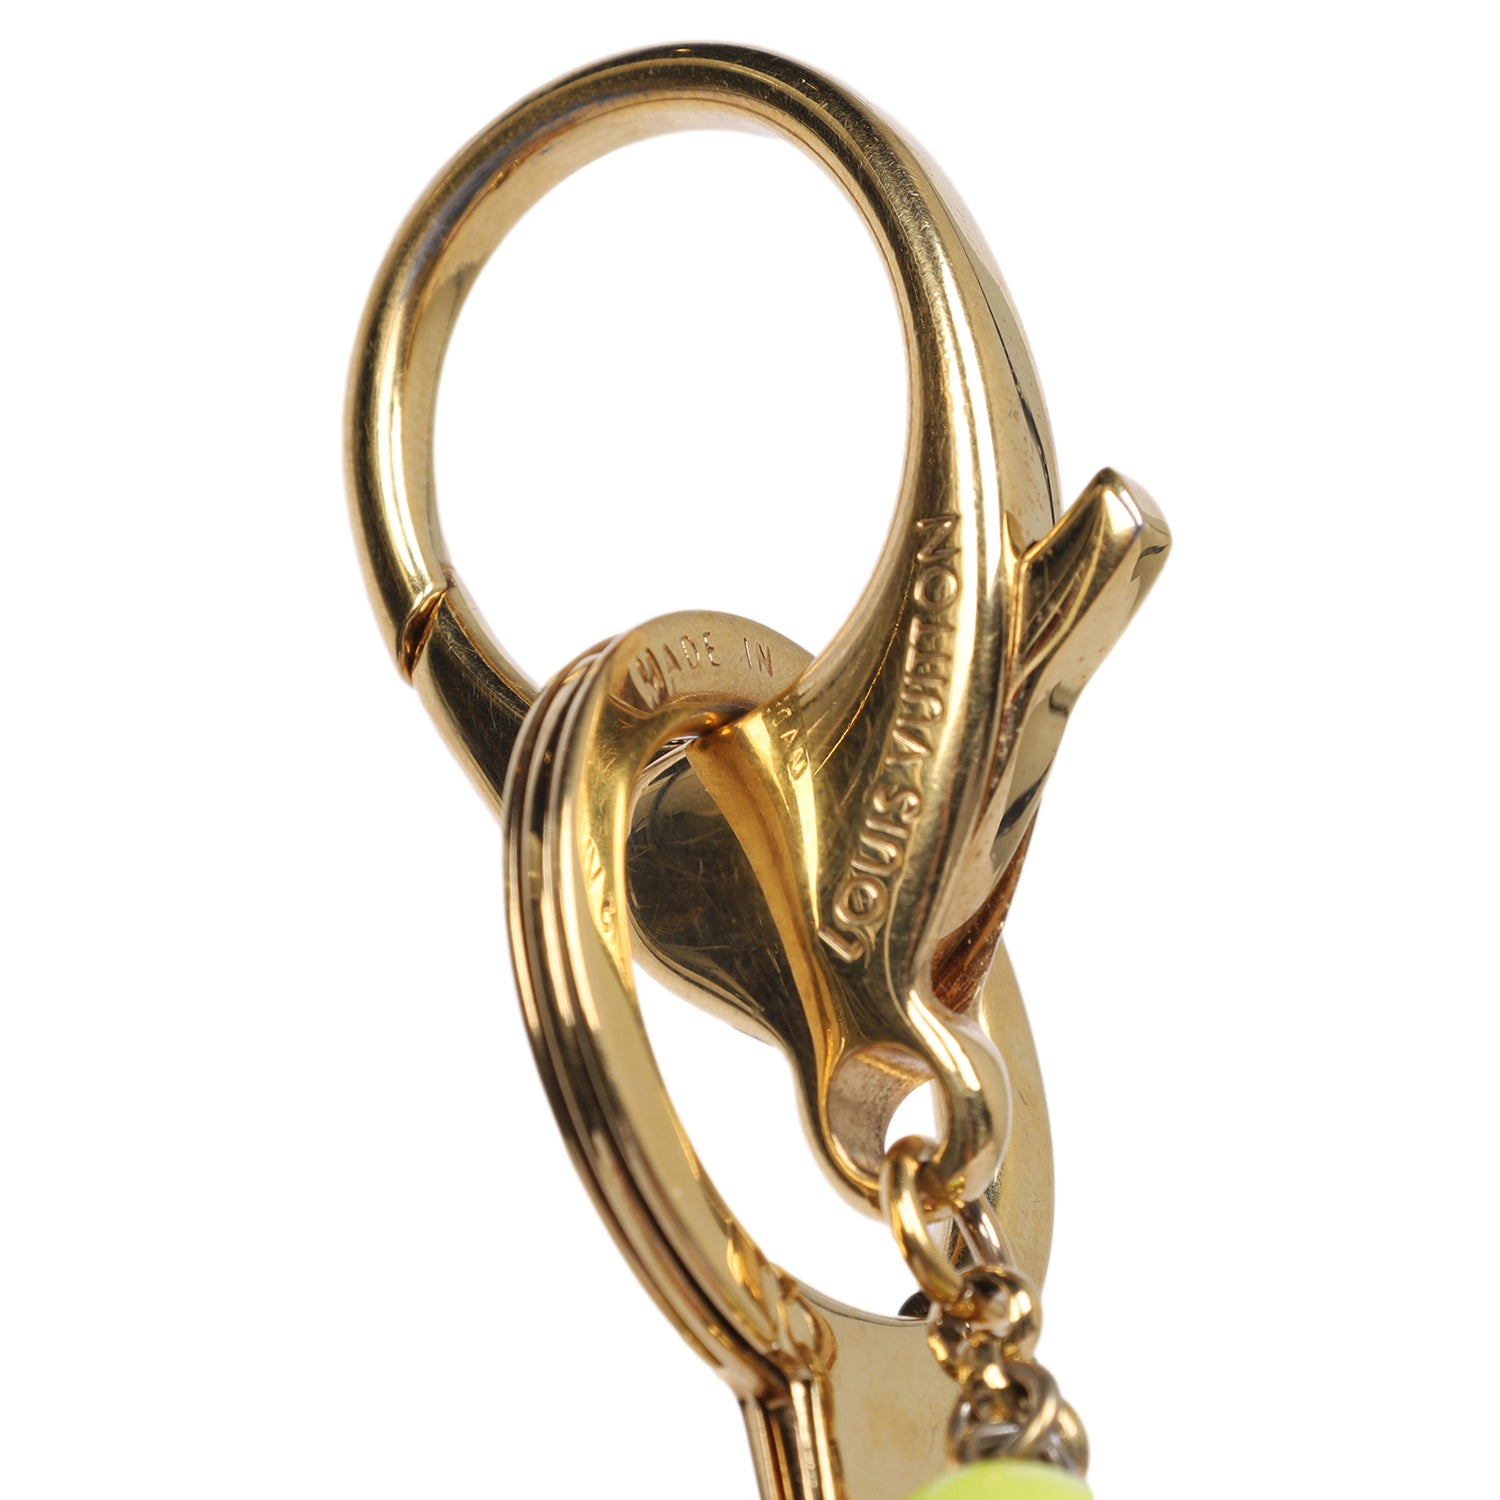 Repurposed Louis Vuitton Key Clasp Mixed Metals Bracelet